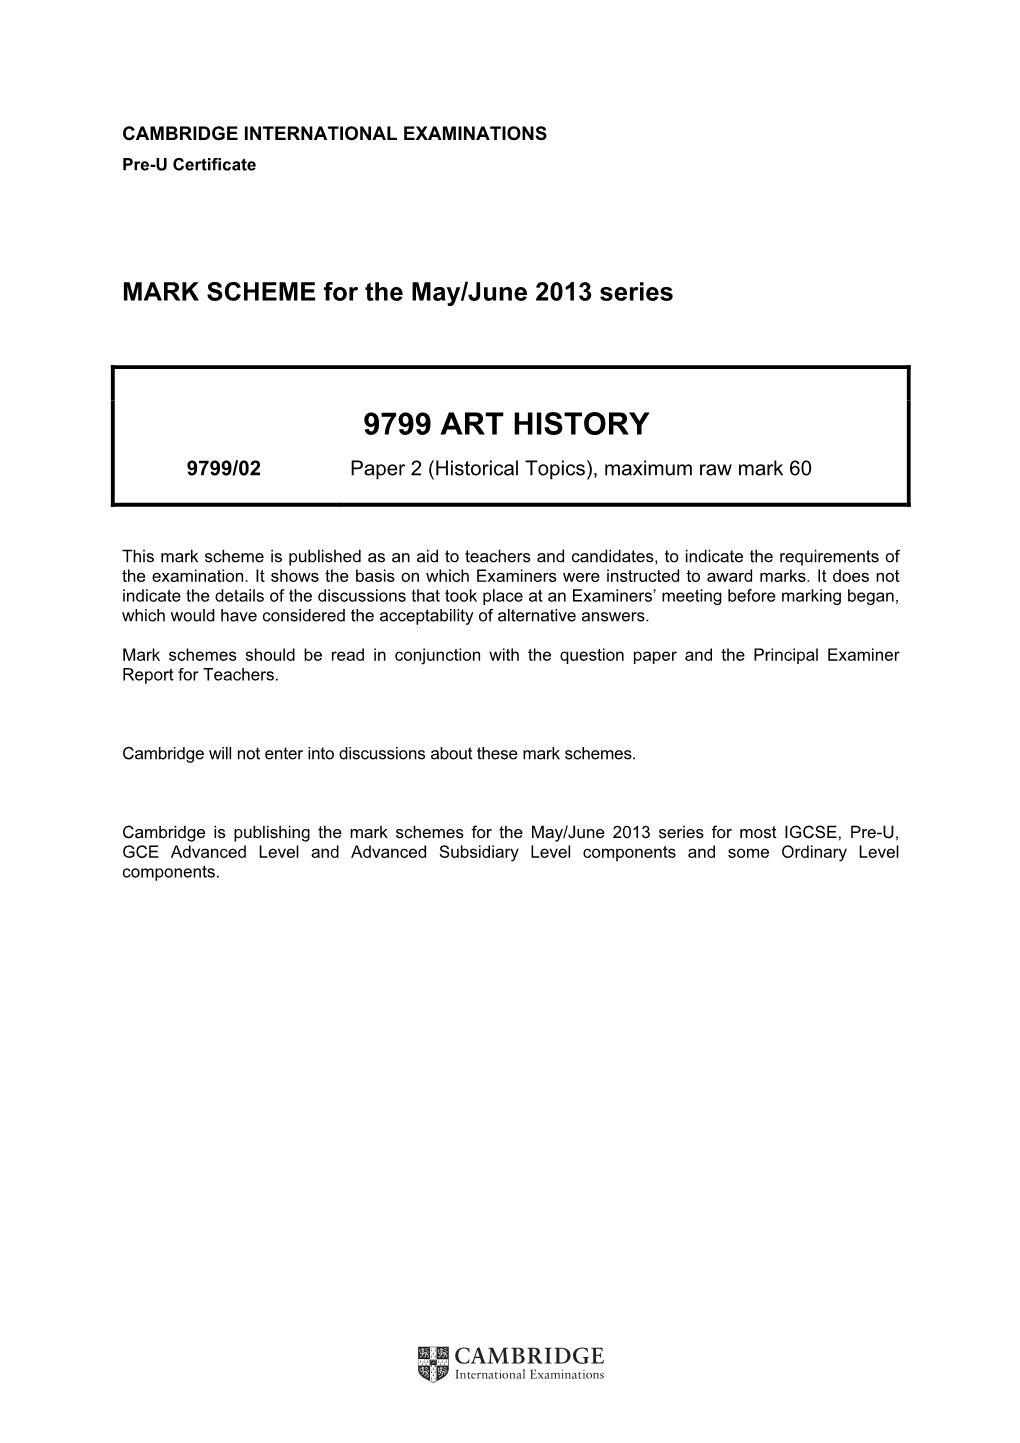 9799 ART HISTORY 9799/02 Paper 2 (Historical Topics), Maximum Raw Mark 60